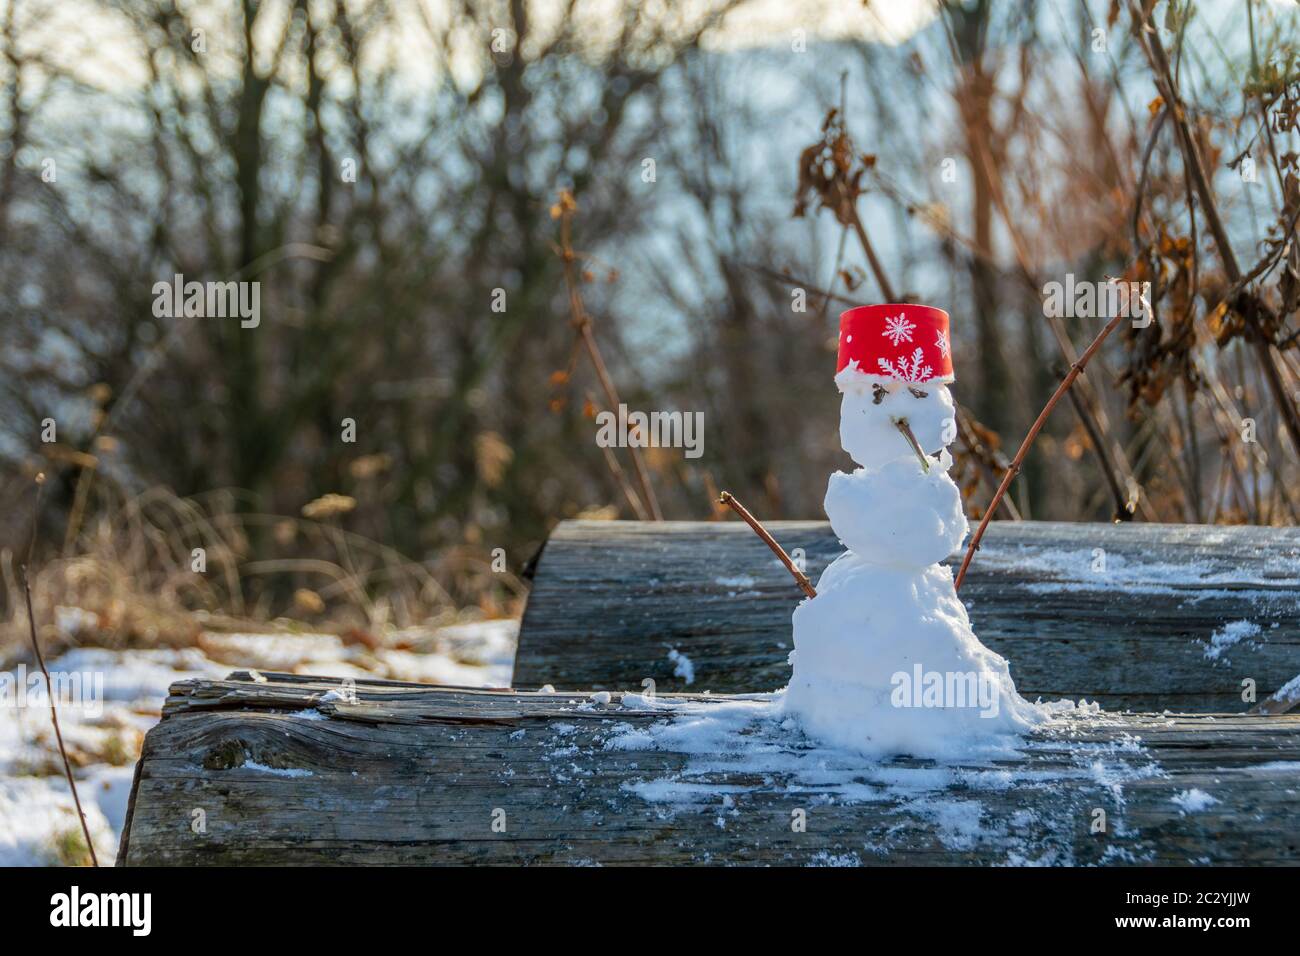 A small snowman seen on the Cozla mountain, Piatra Neamt, Romania Stock Photo